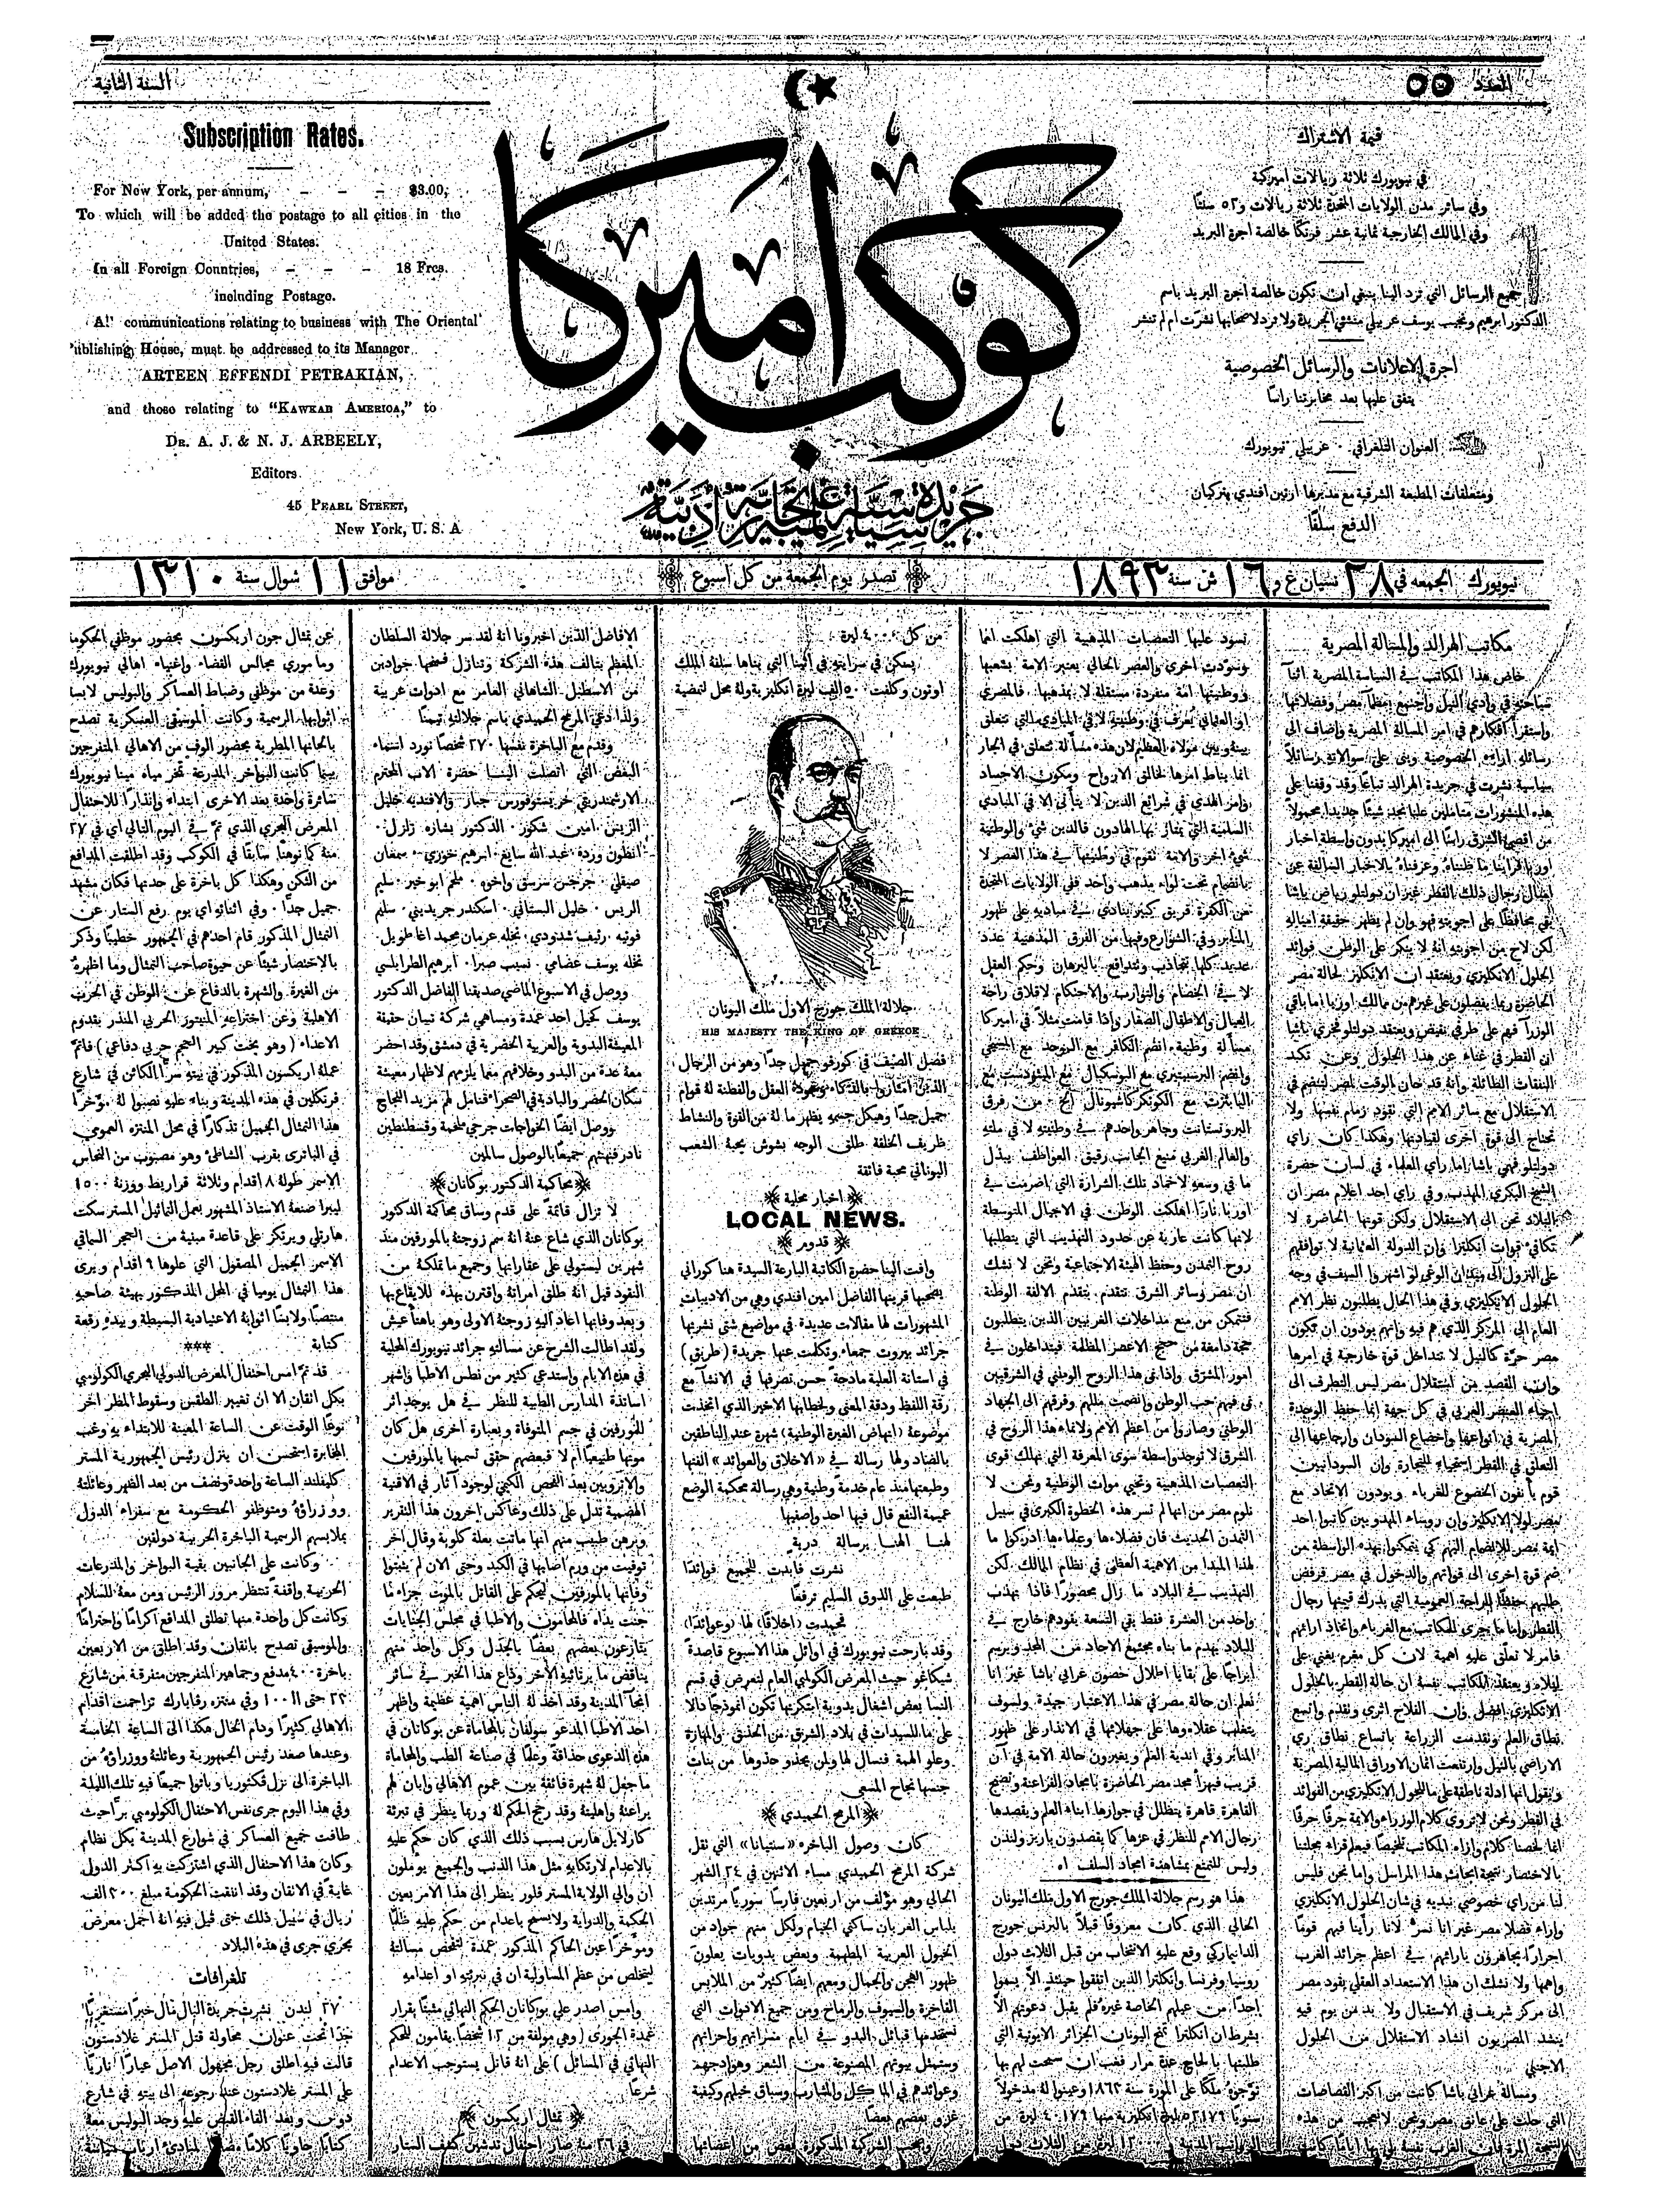 Kawkab America #55, 28 Apr 1893, p.1 (Arabic)